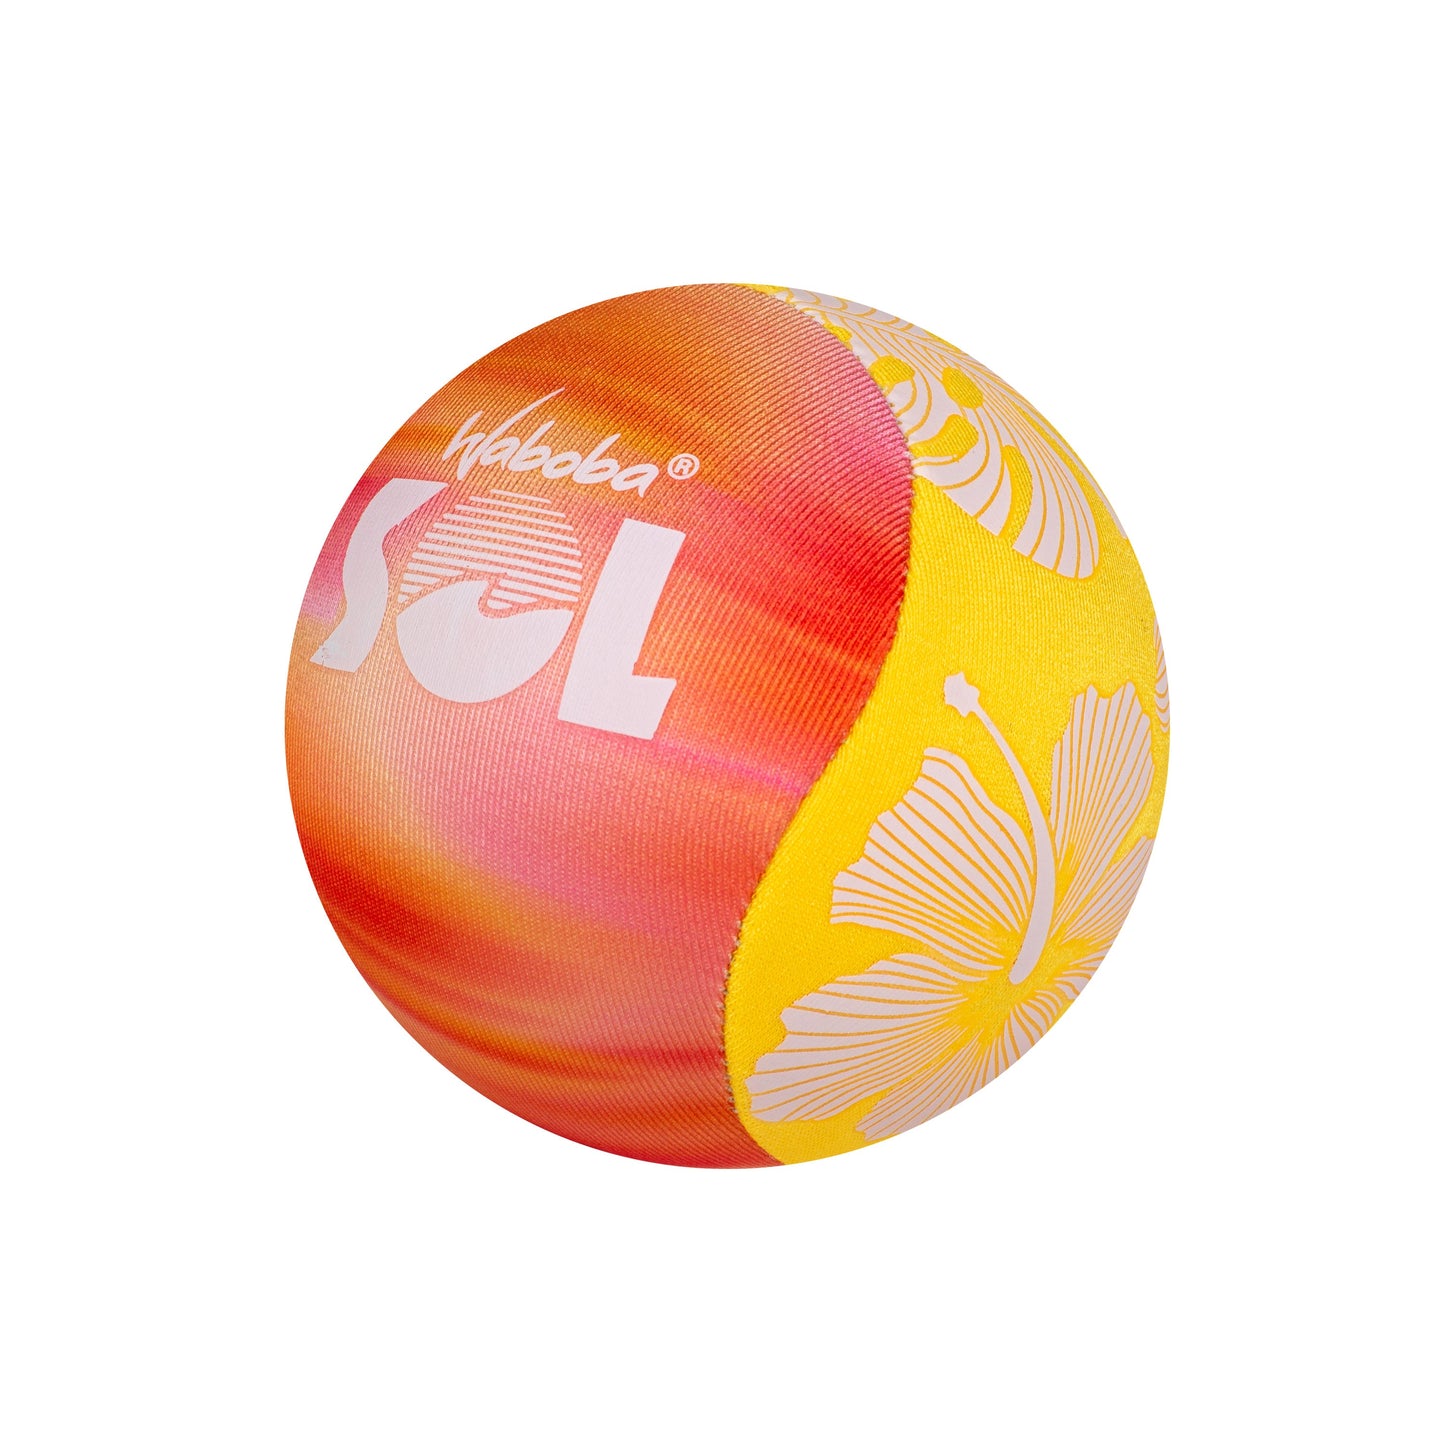 Sol Ball